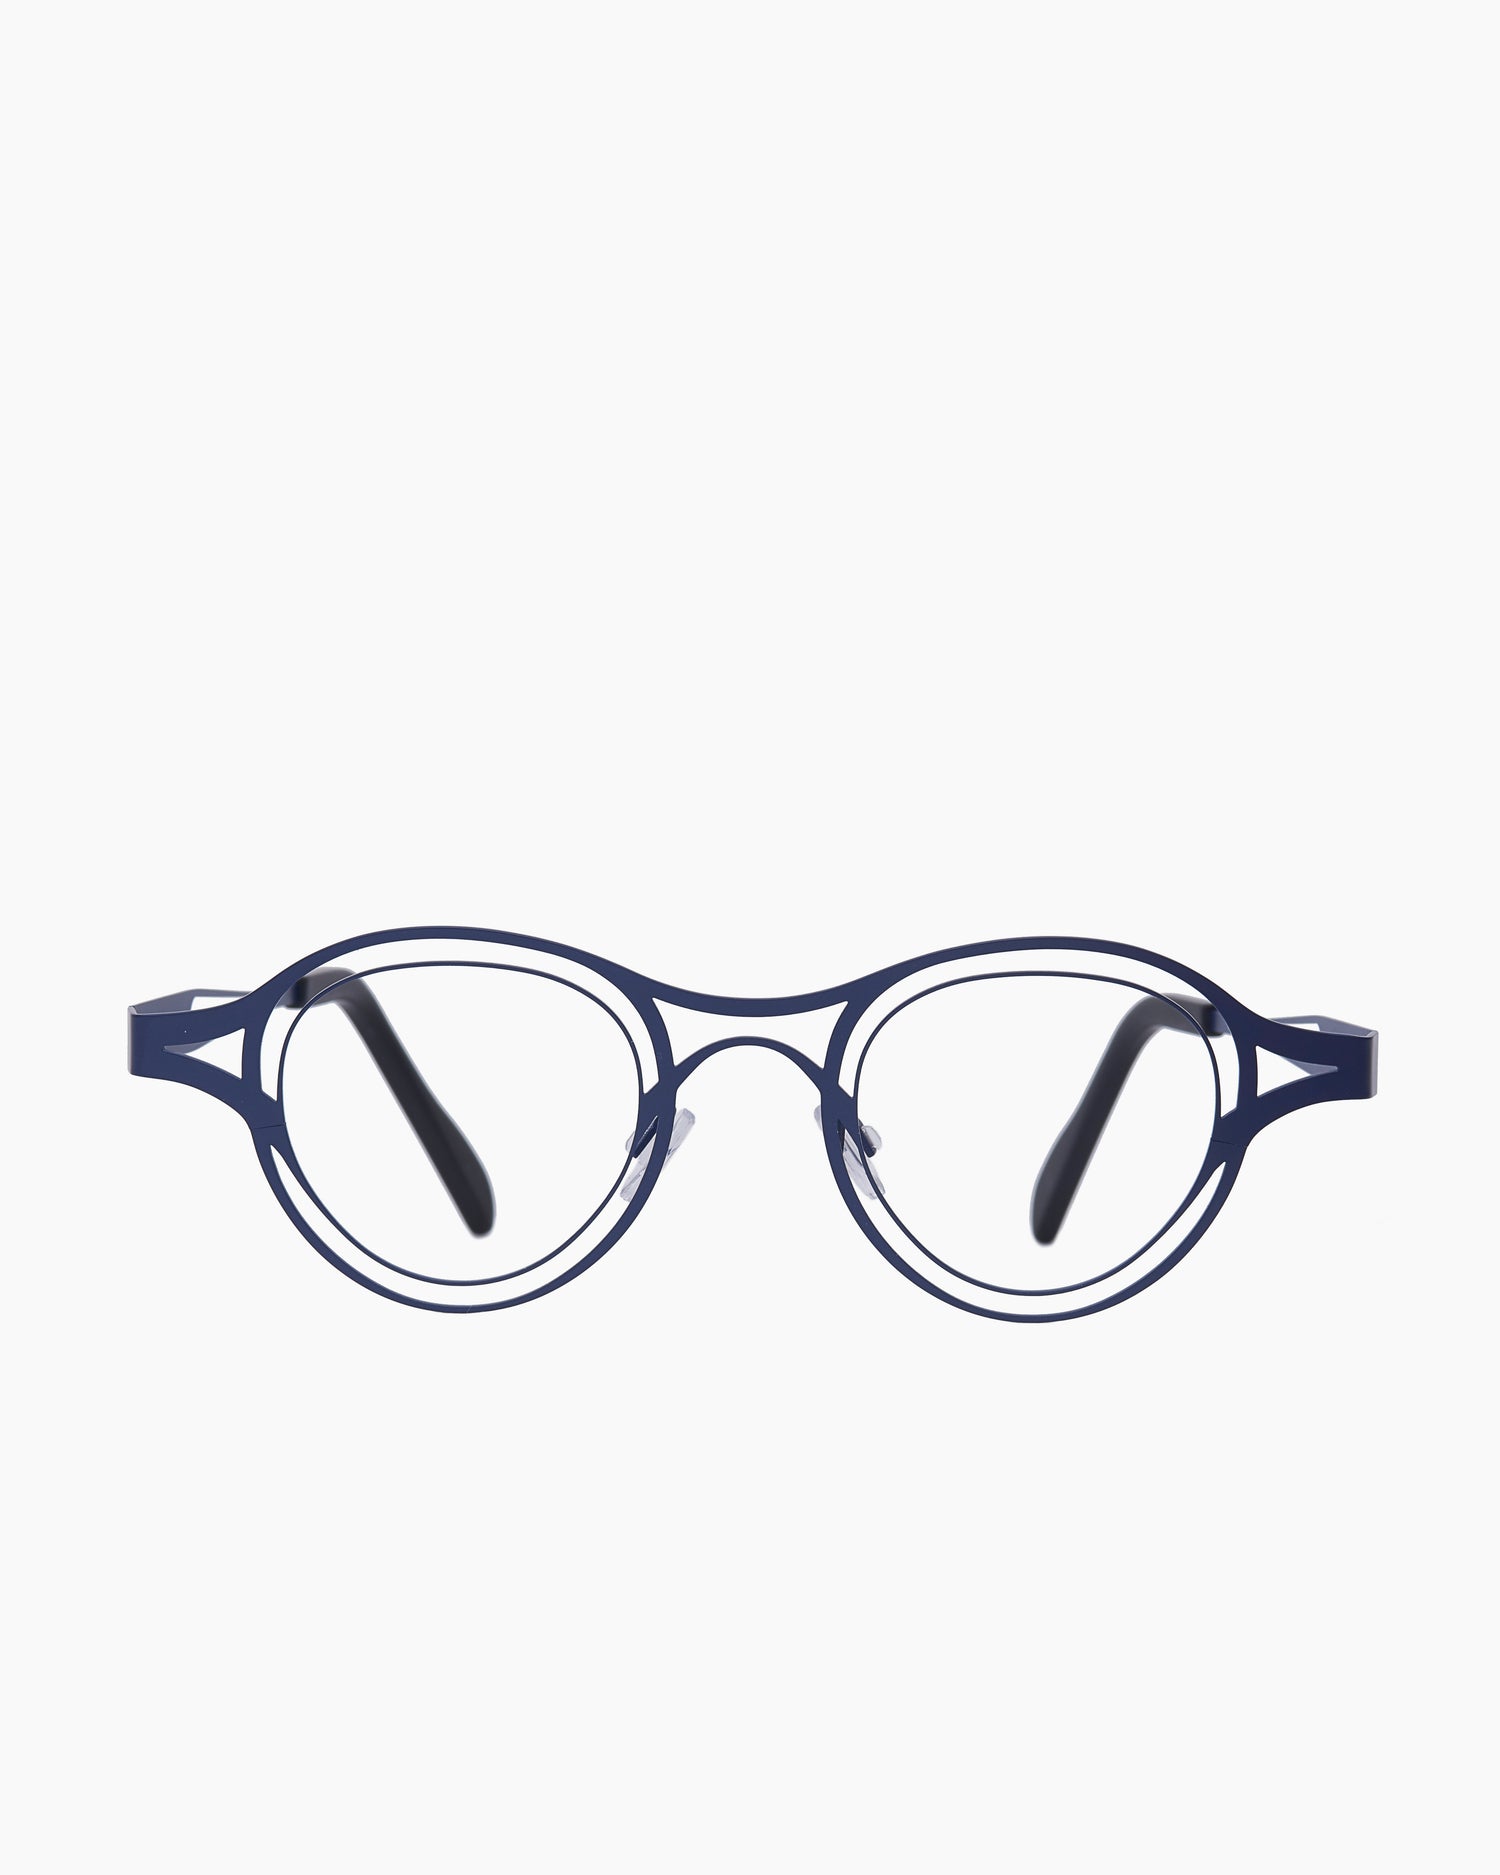 Theo - Tarifa - 353 | glasses bar:  Marie-Sophie Dion